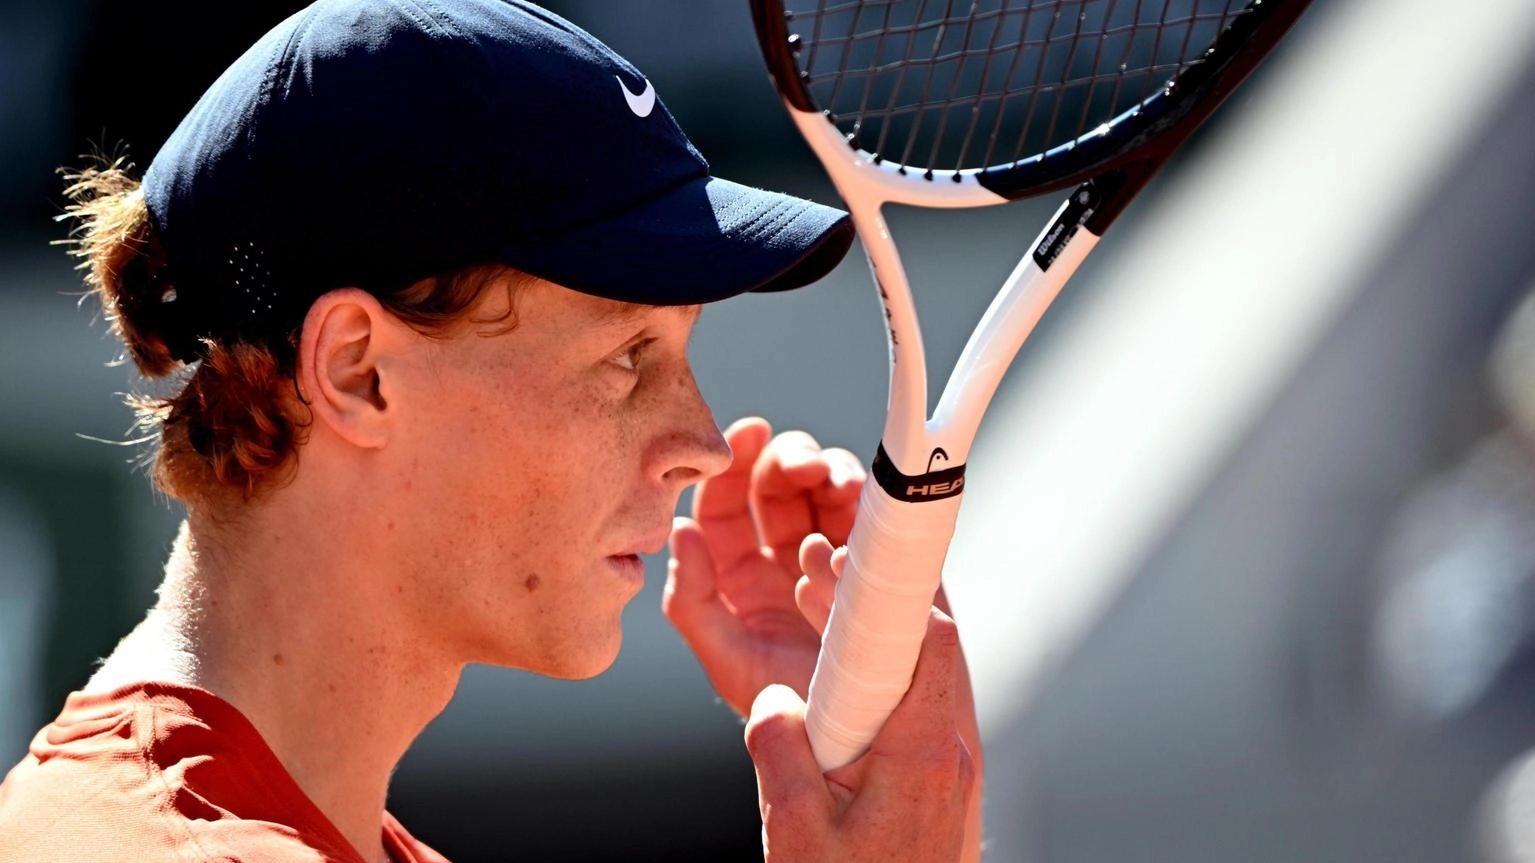 Roland Garros: Sinner, "bel match, ora avanti per migliorare"